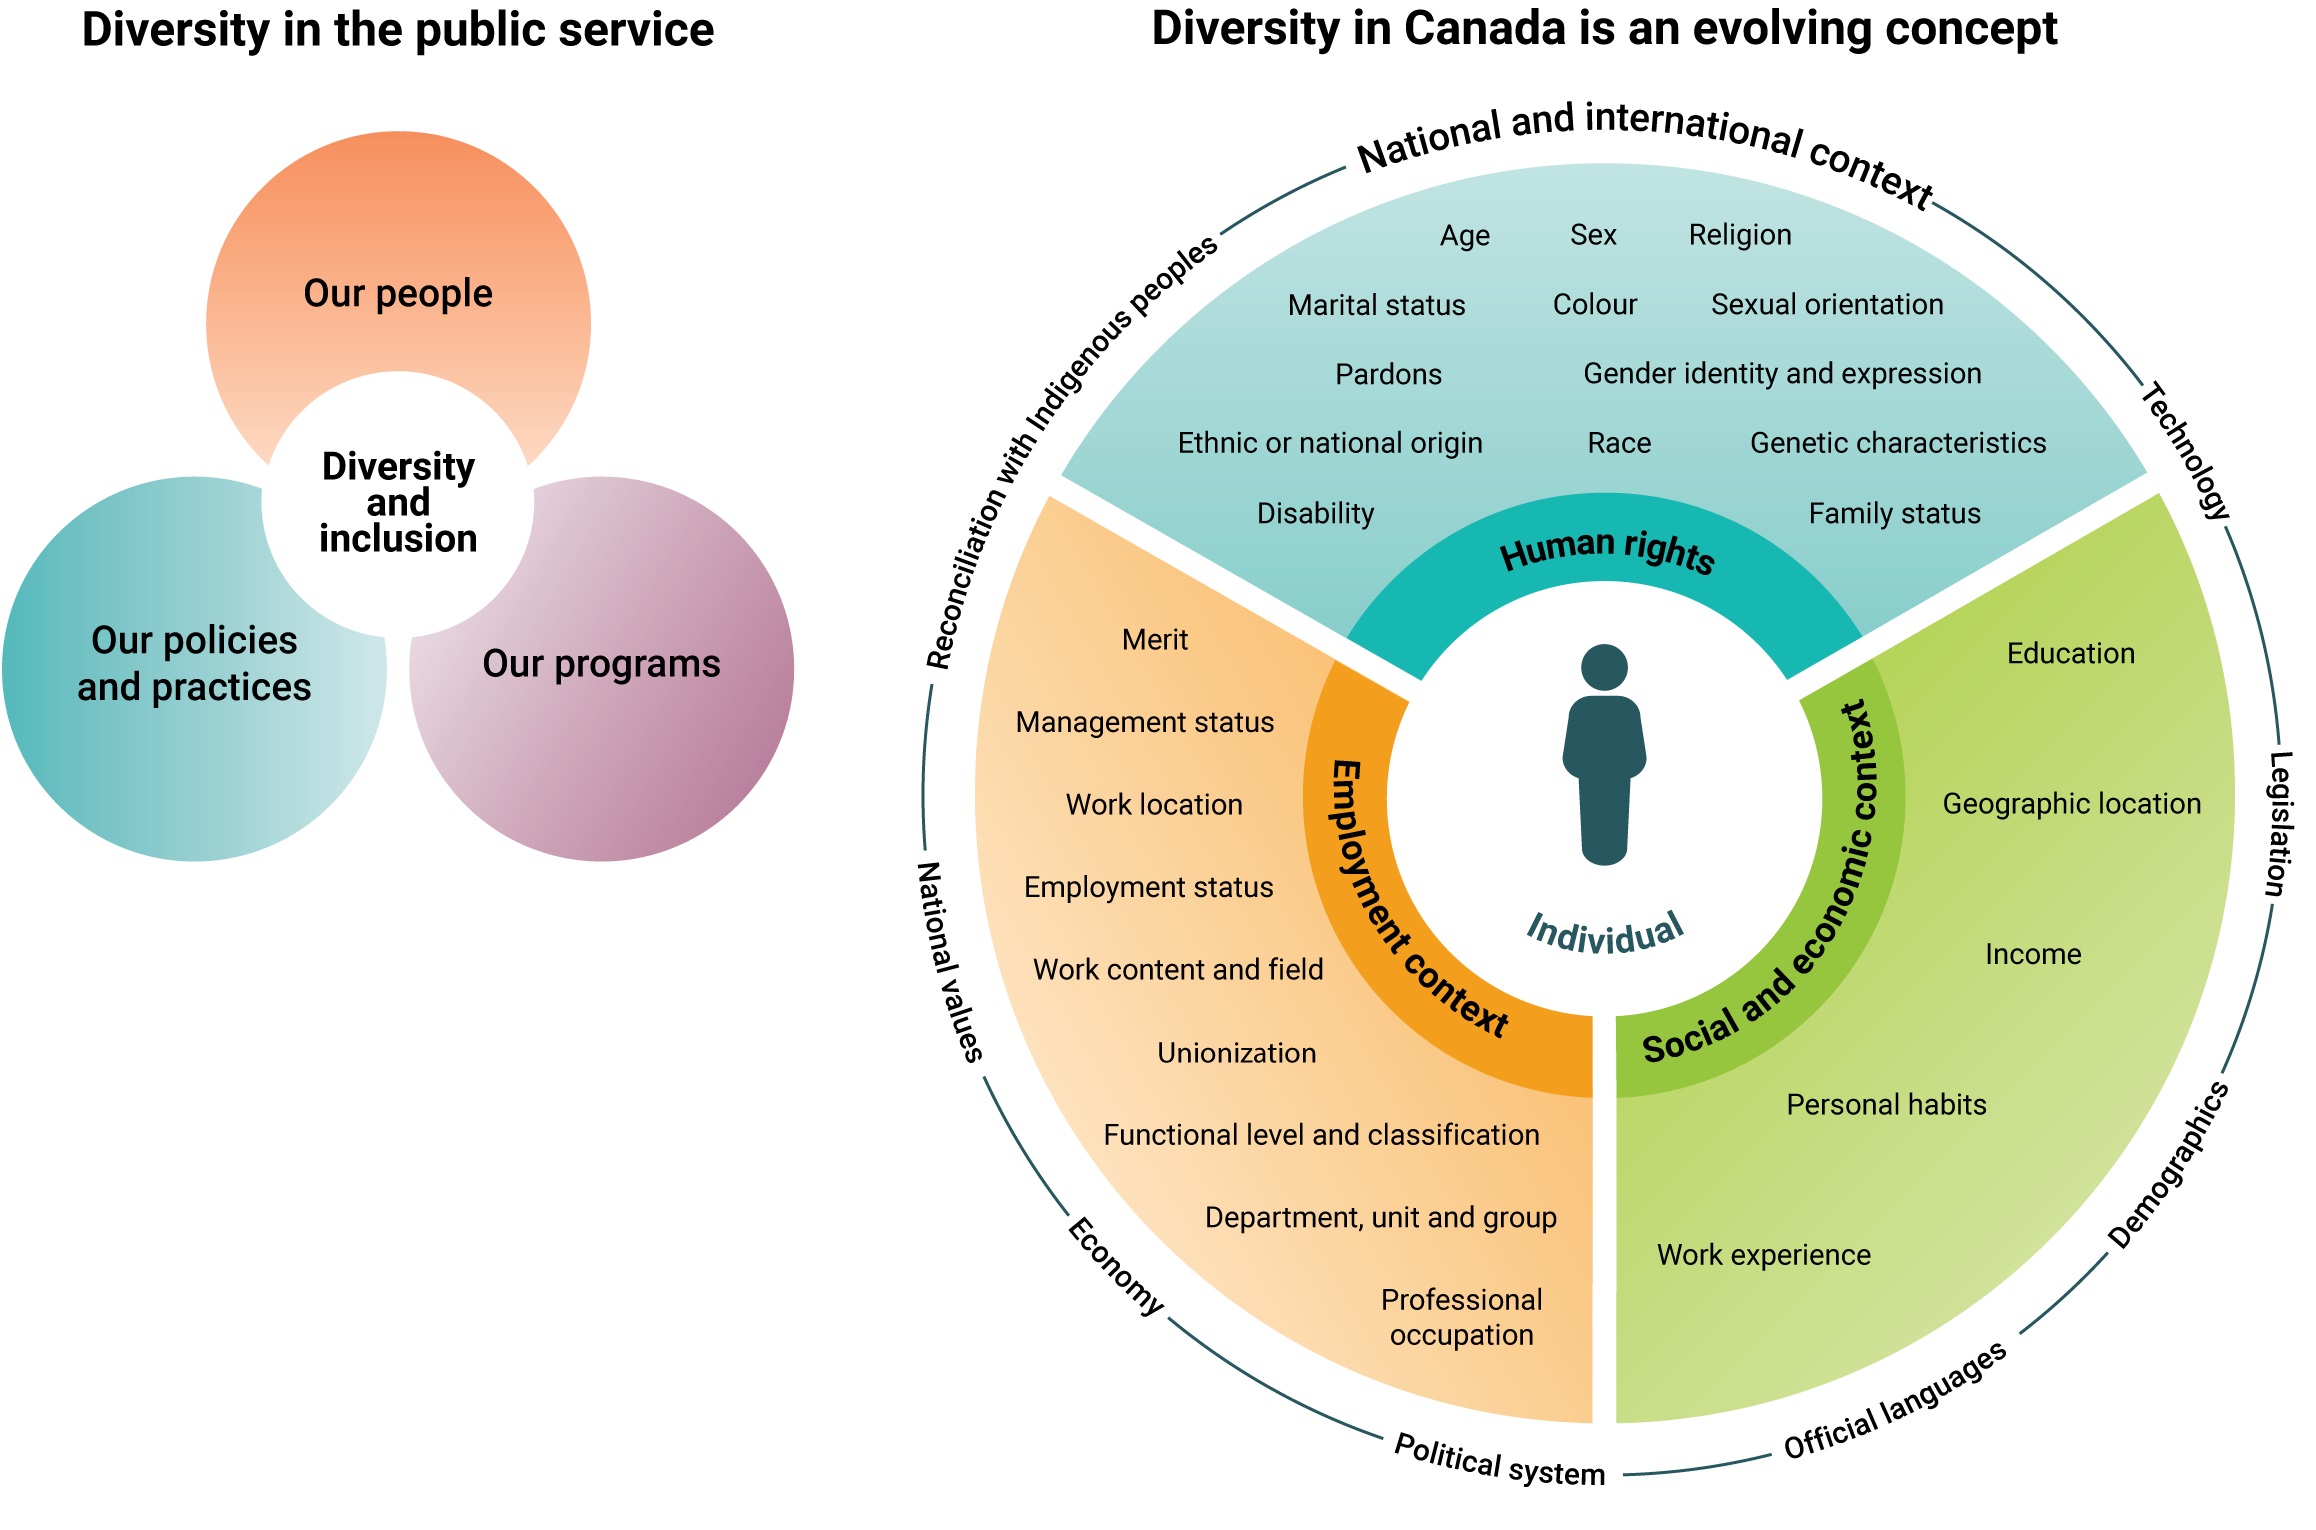 Diversity  in Canada's public service. Text version below: